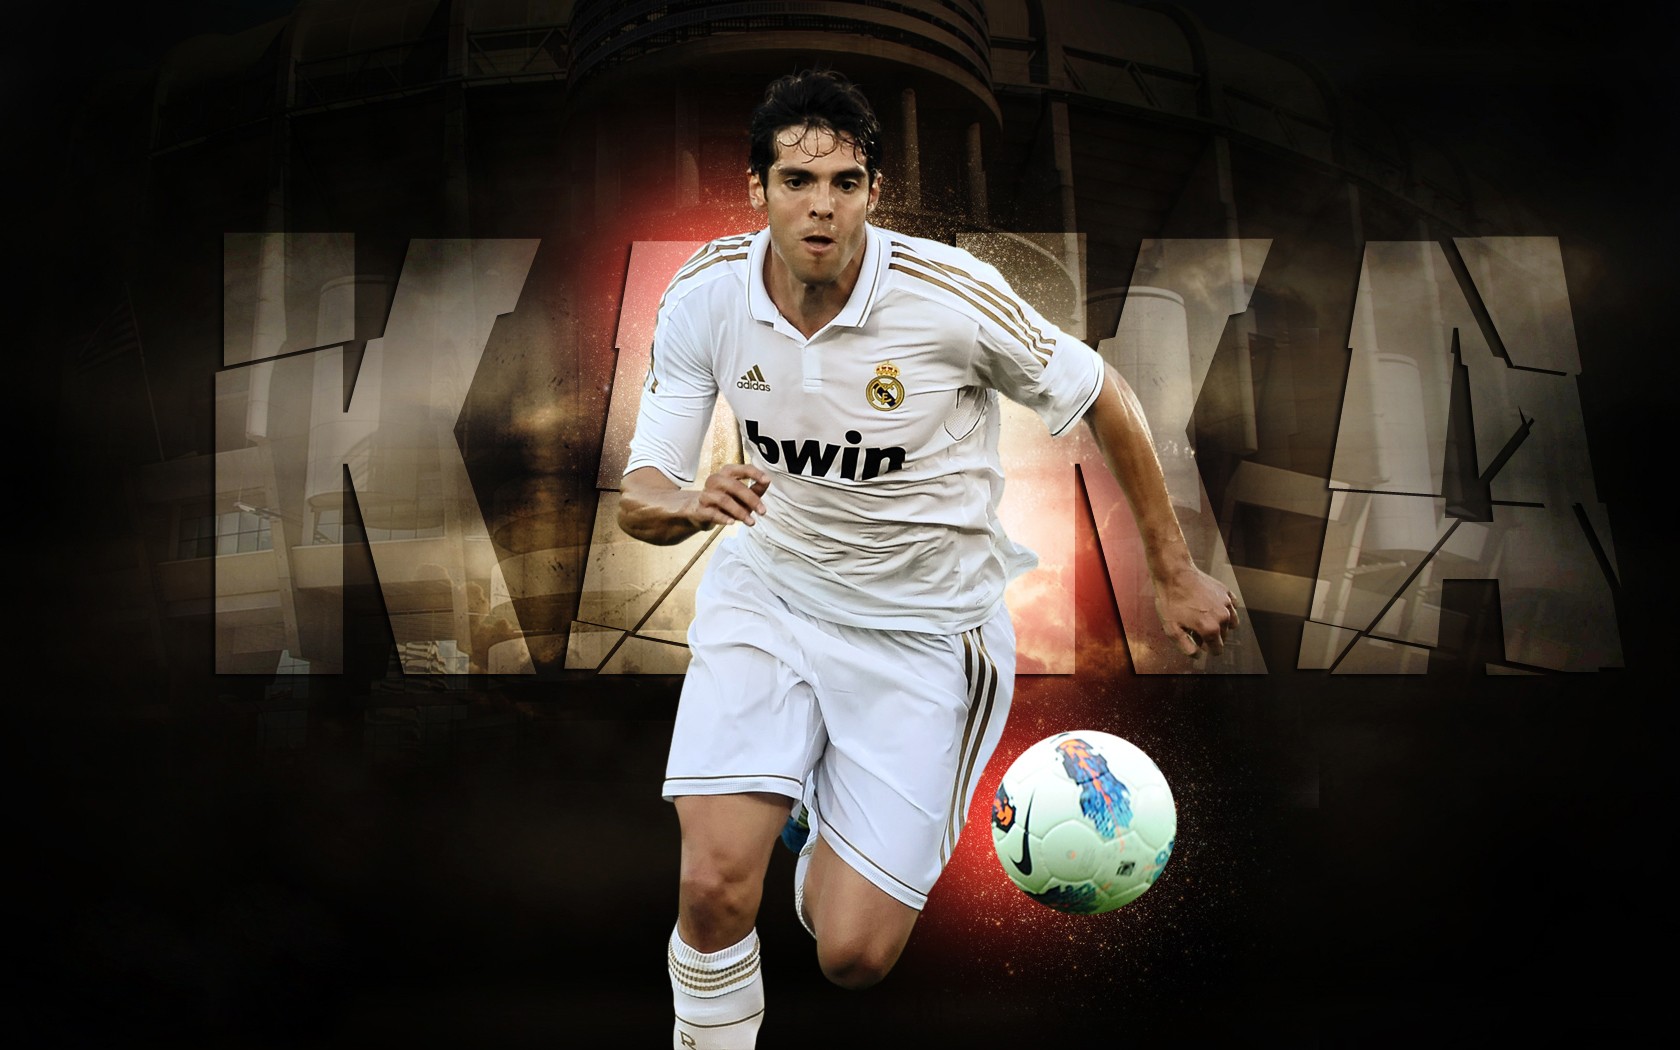 Real Madrid Kaka1 Kaka Imgstocks